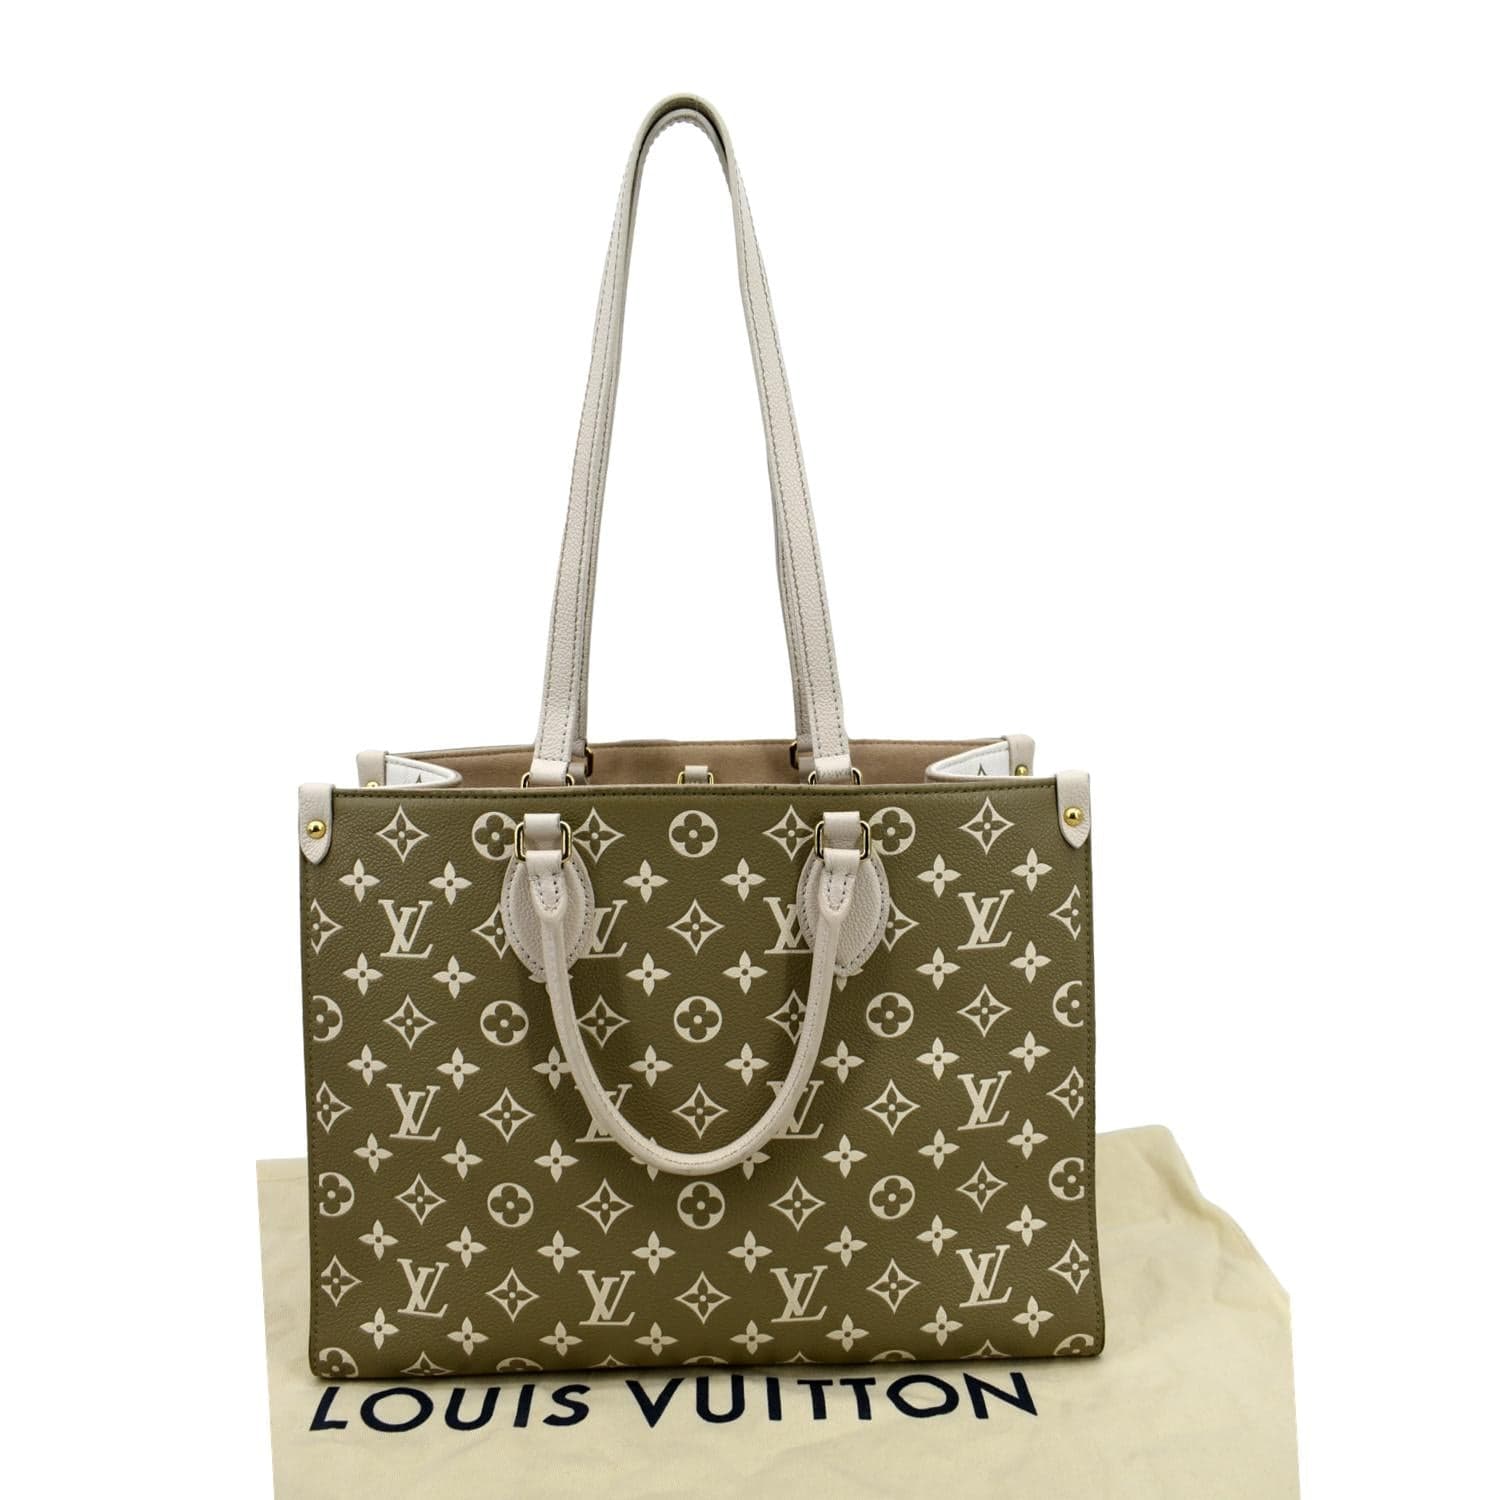 Louis Vuitton Neverfull Black & White Monogram Empreinte Spring in the City  bag